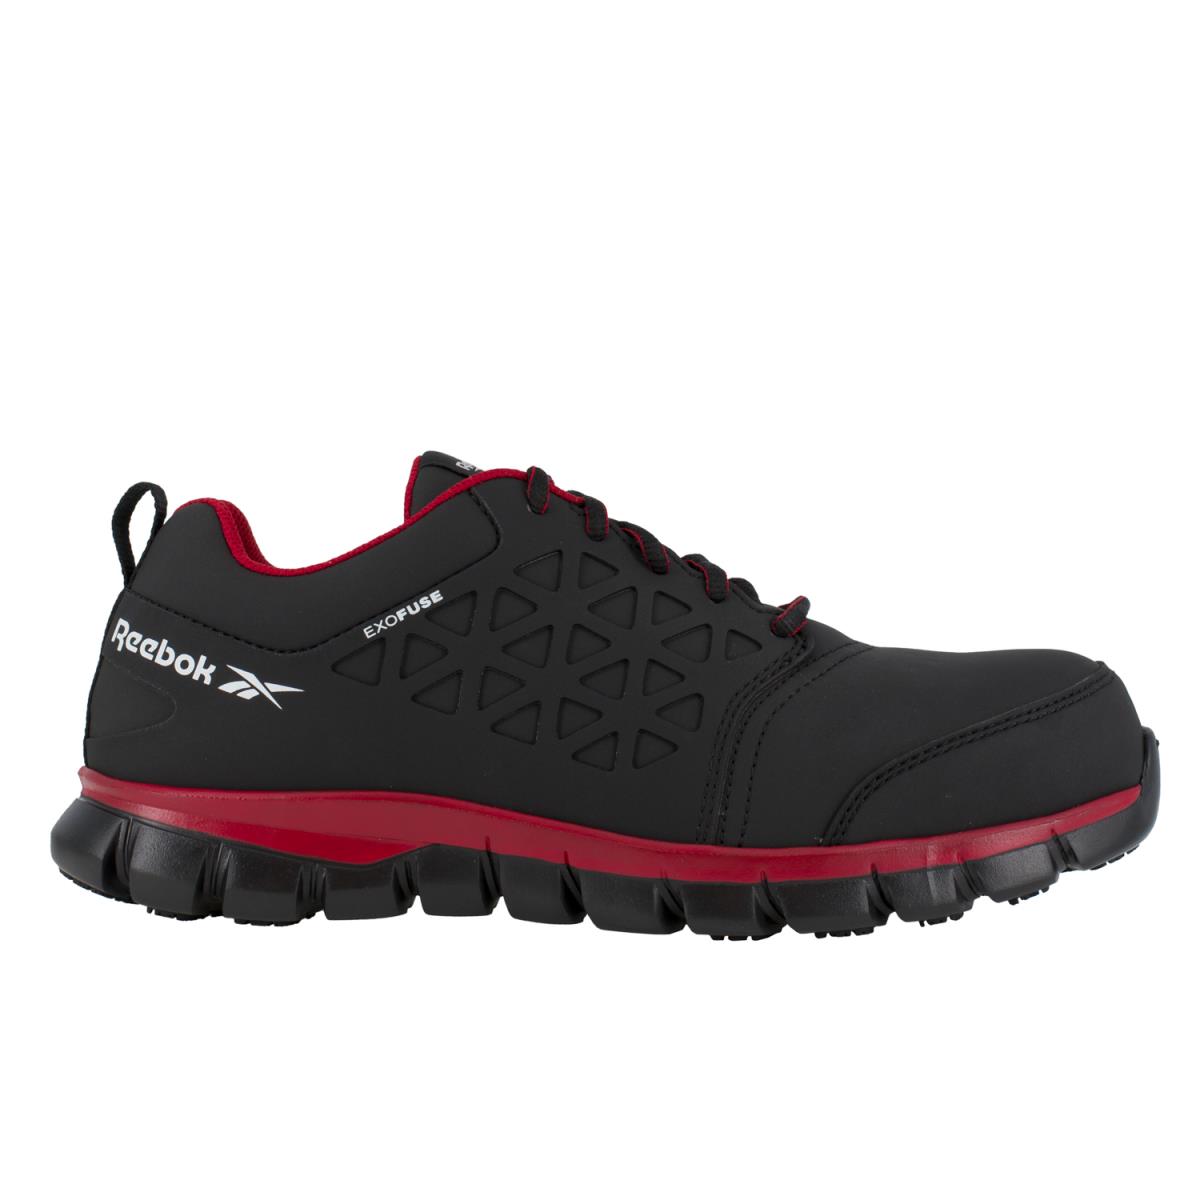 Reebok Mens Black/red Textile Work Shoes Sublite Cushion CT Athletic M